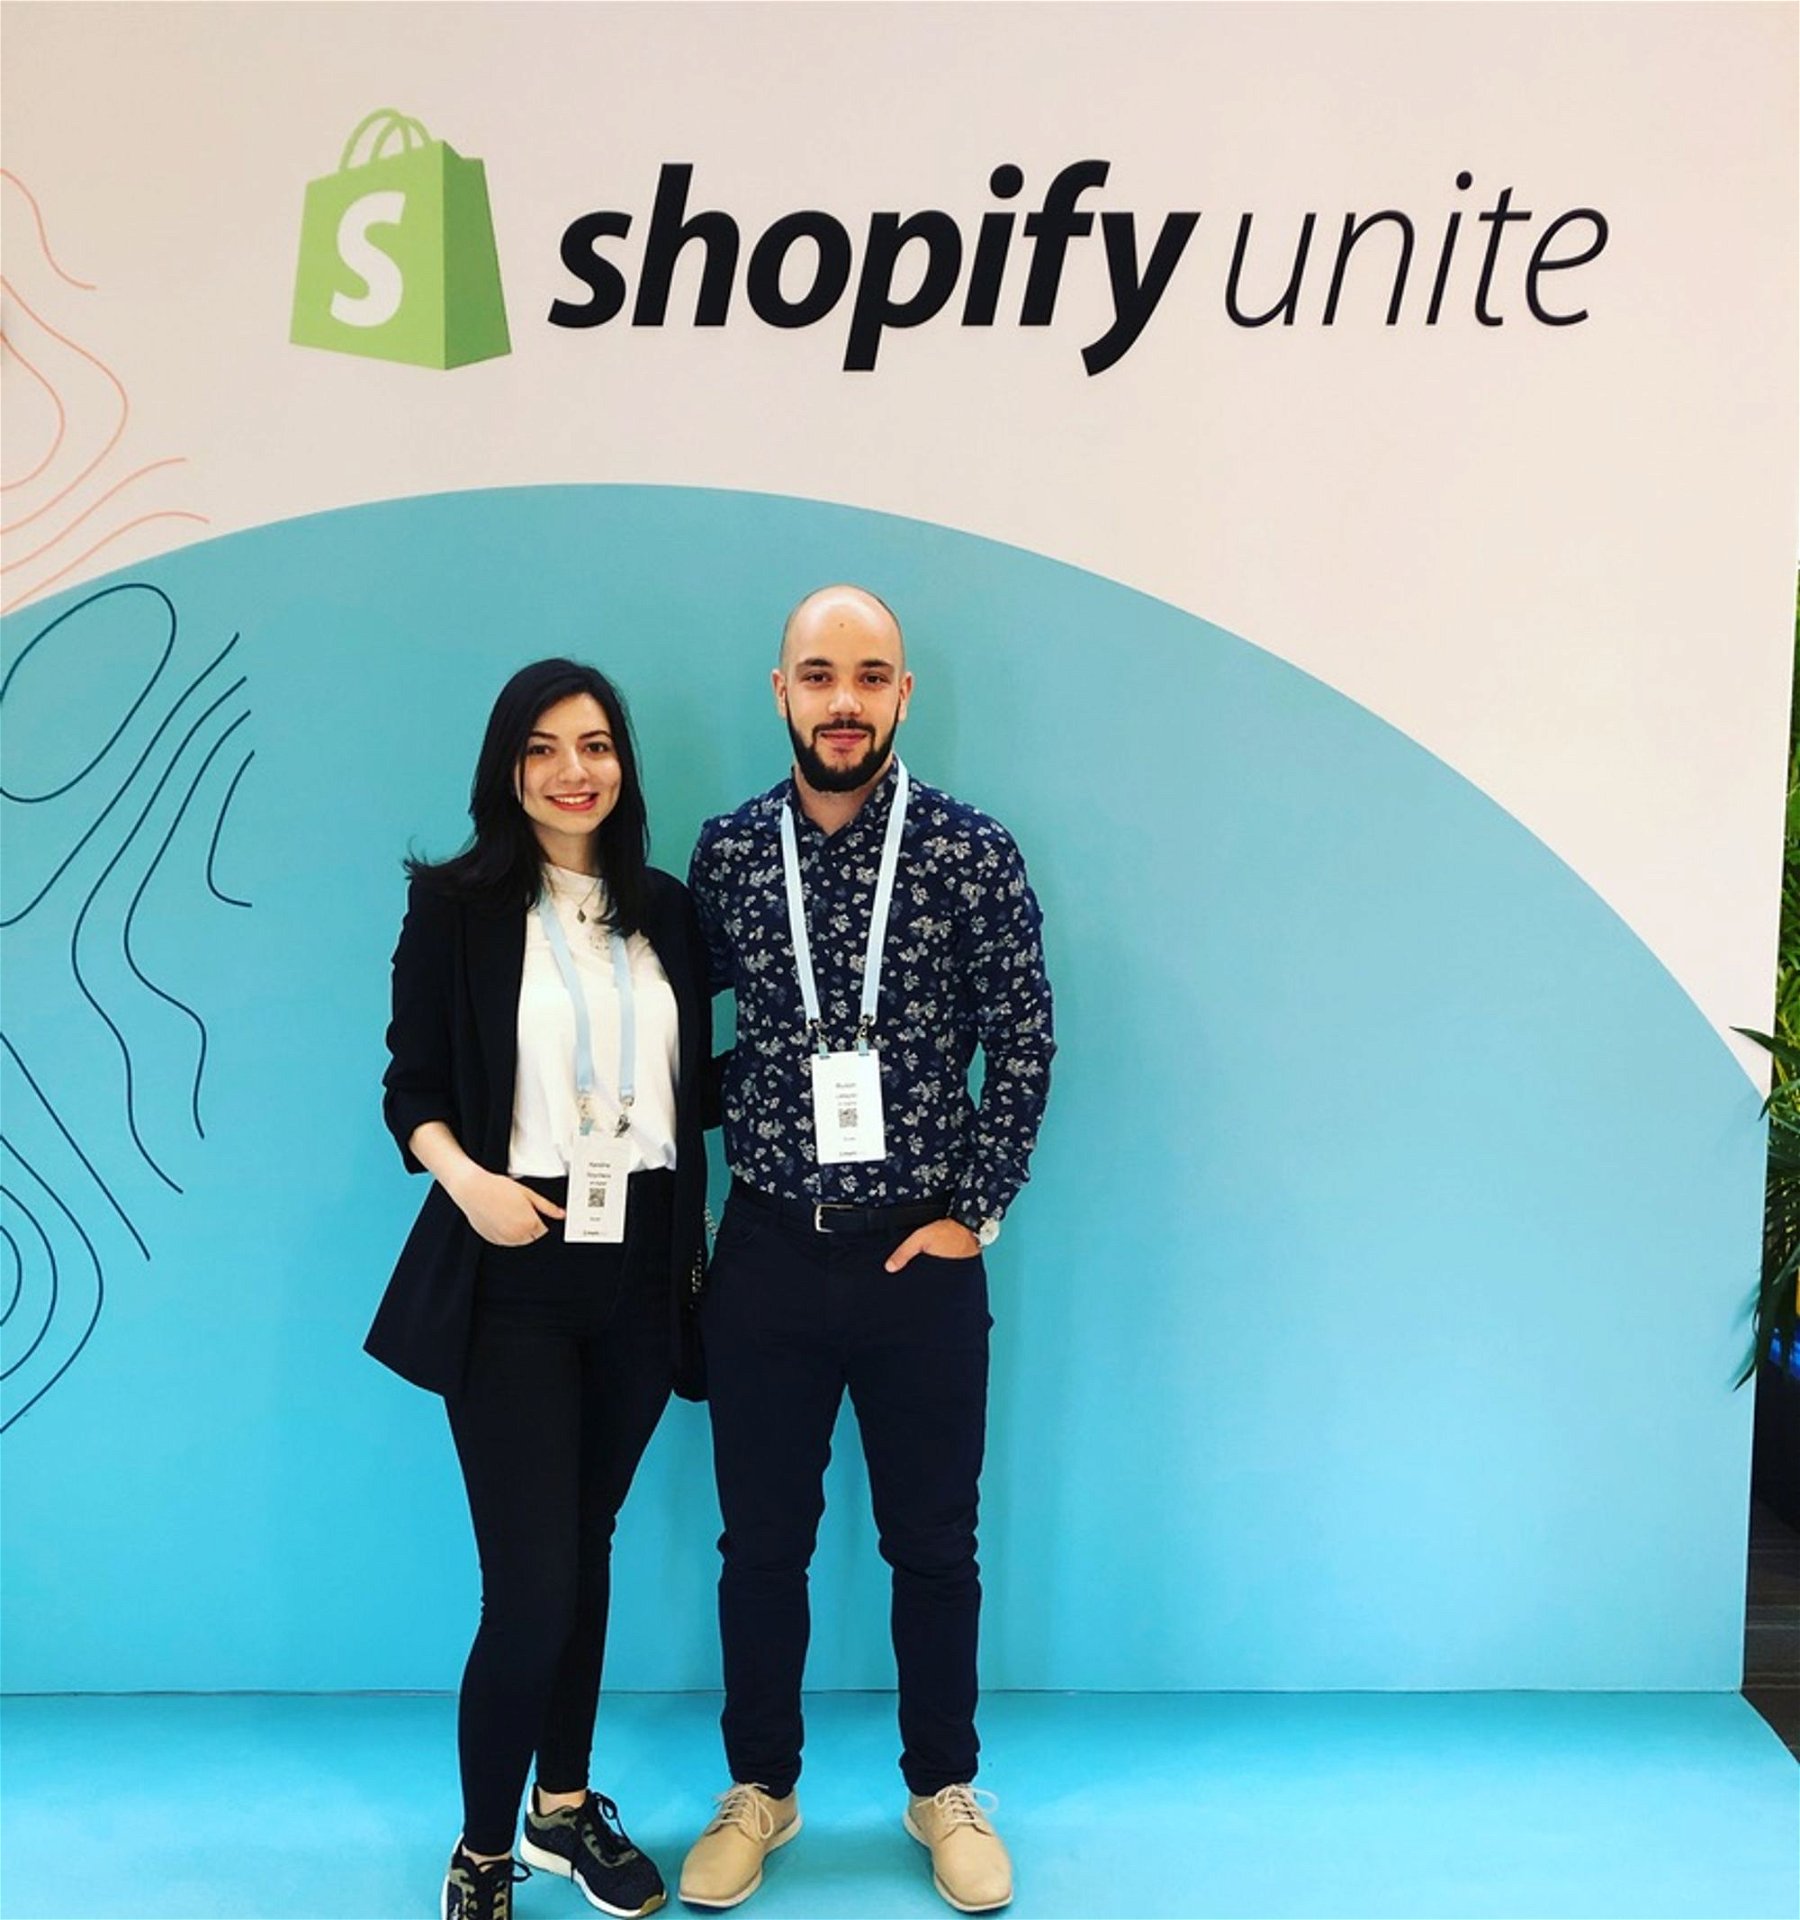 Me and Karolina @ Shopify Unite 2019